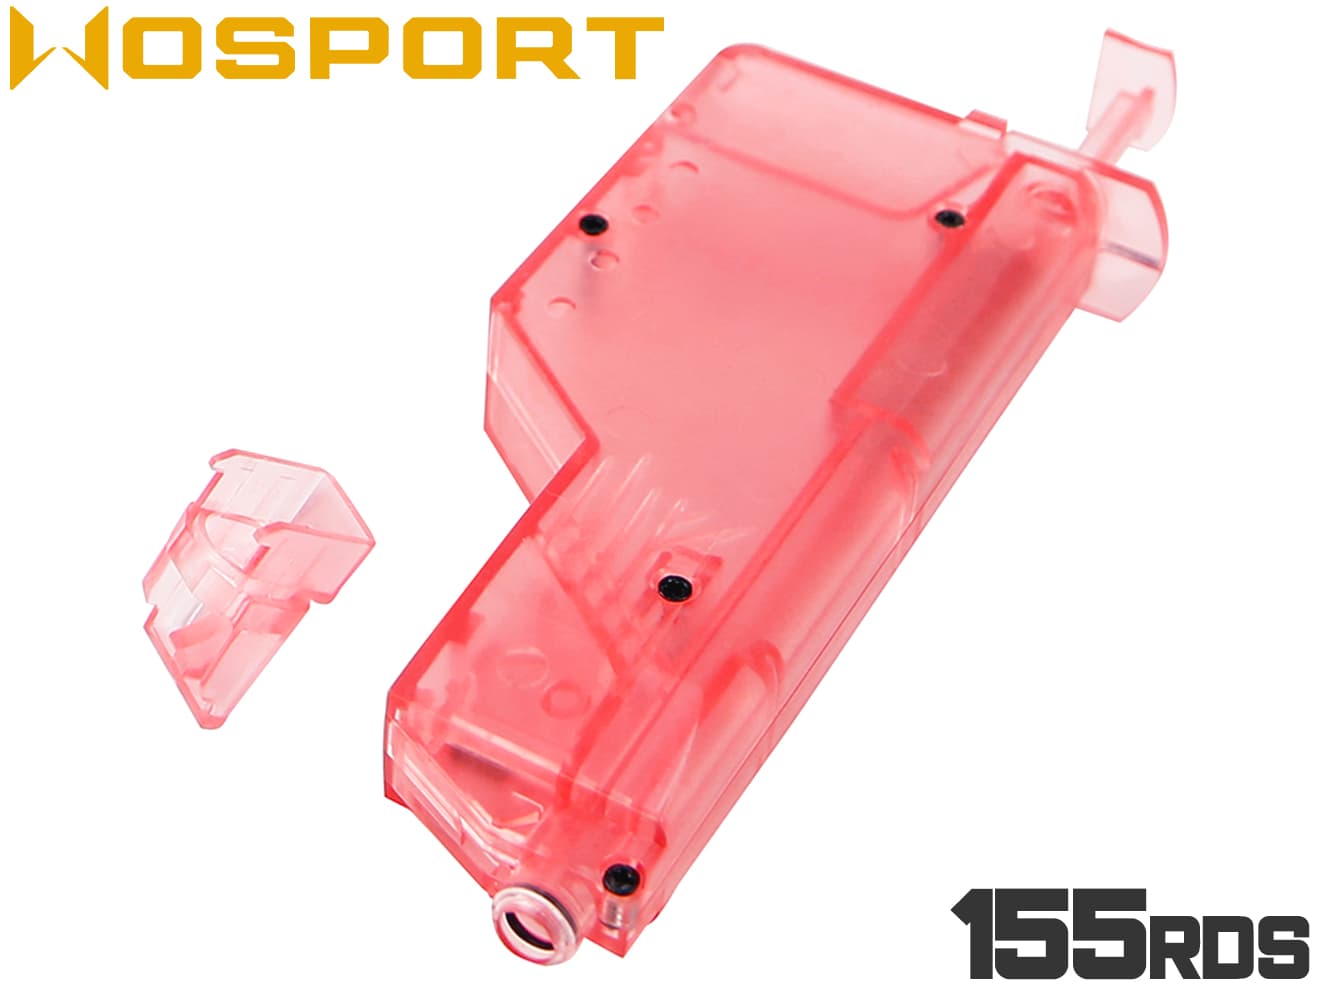 WoSporT ピストルマガジン型 ラージBBローダー 155Rds◆ビービーローダー 6色展開 個性演出 BB弾を素早く装填 ロック機能付 弾数チェックマーク入 pink ピンク